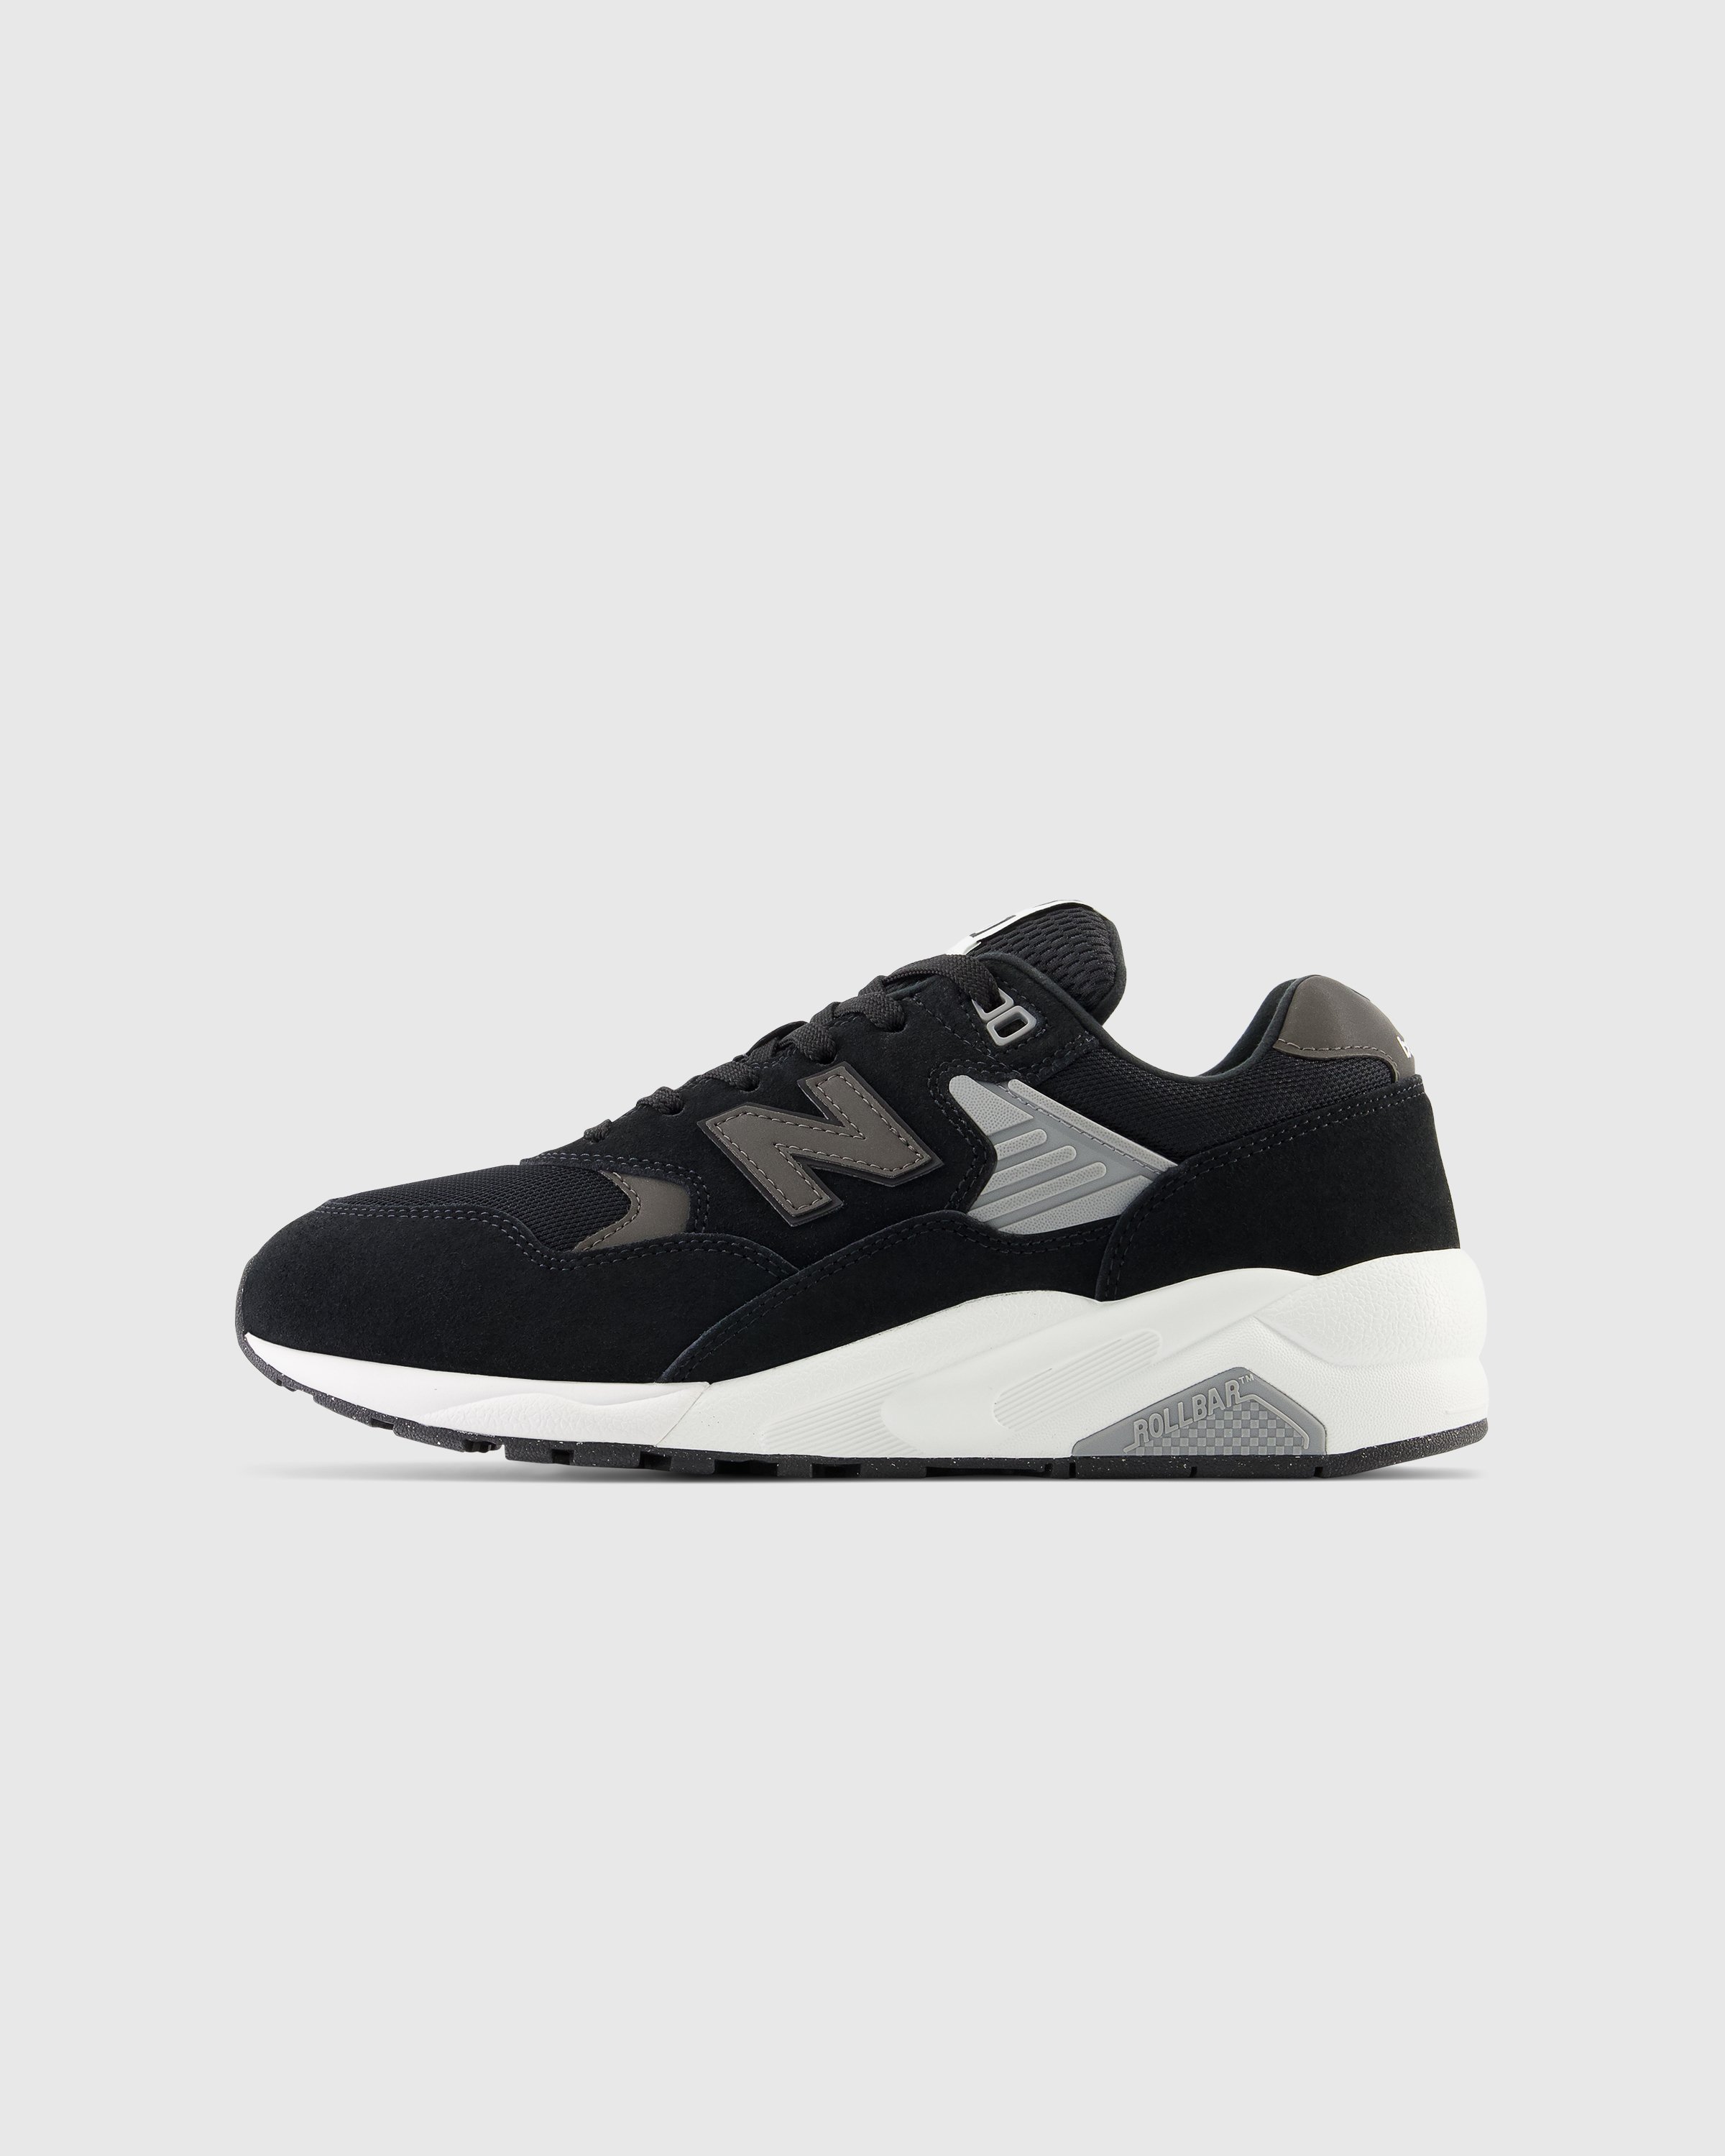 New Balance - 580 Black/Grey/White - Footwear - Black - Image 2